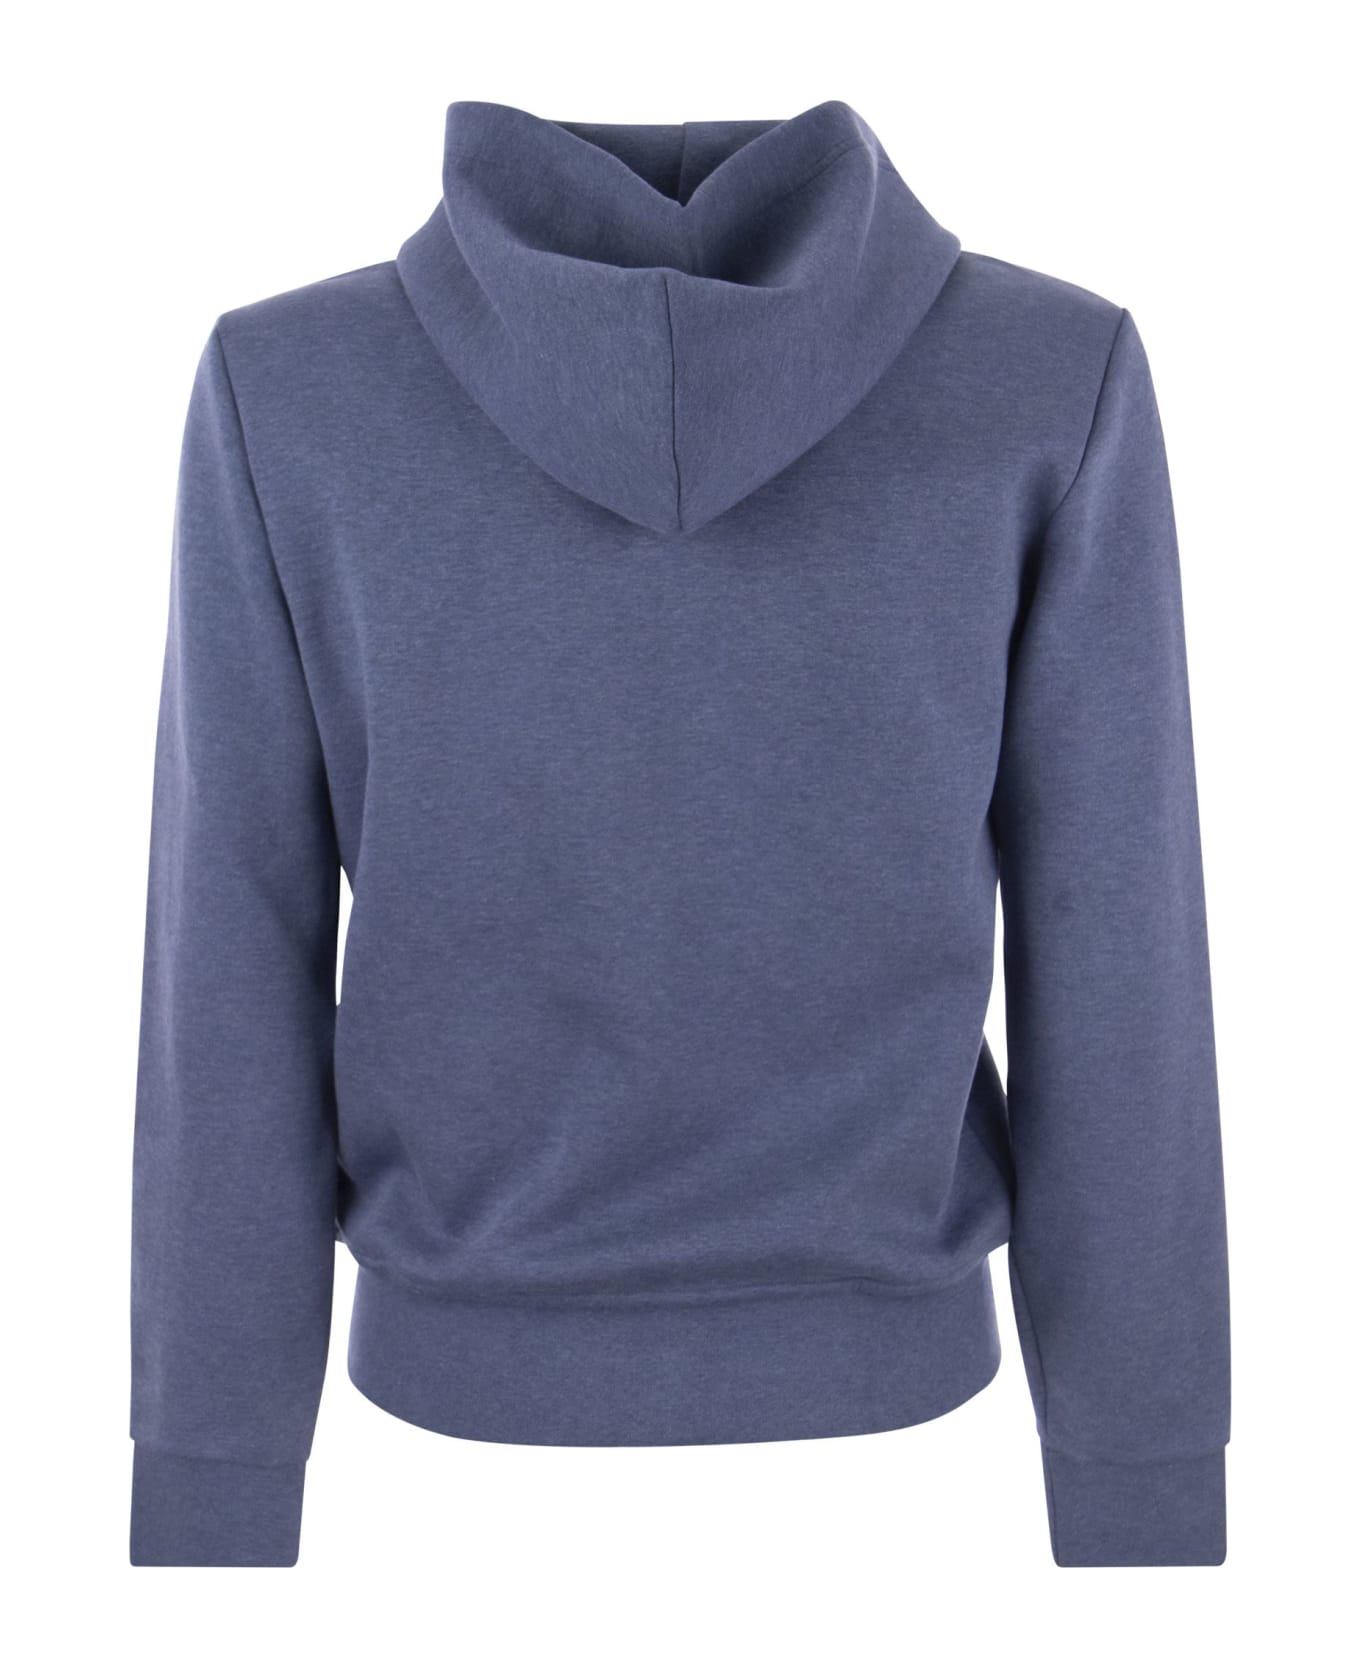 Polo Ralph Lauren Hooded Sweatshirt - Derby Blue Heather